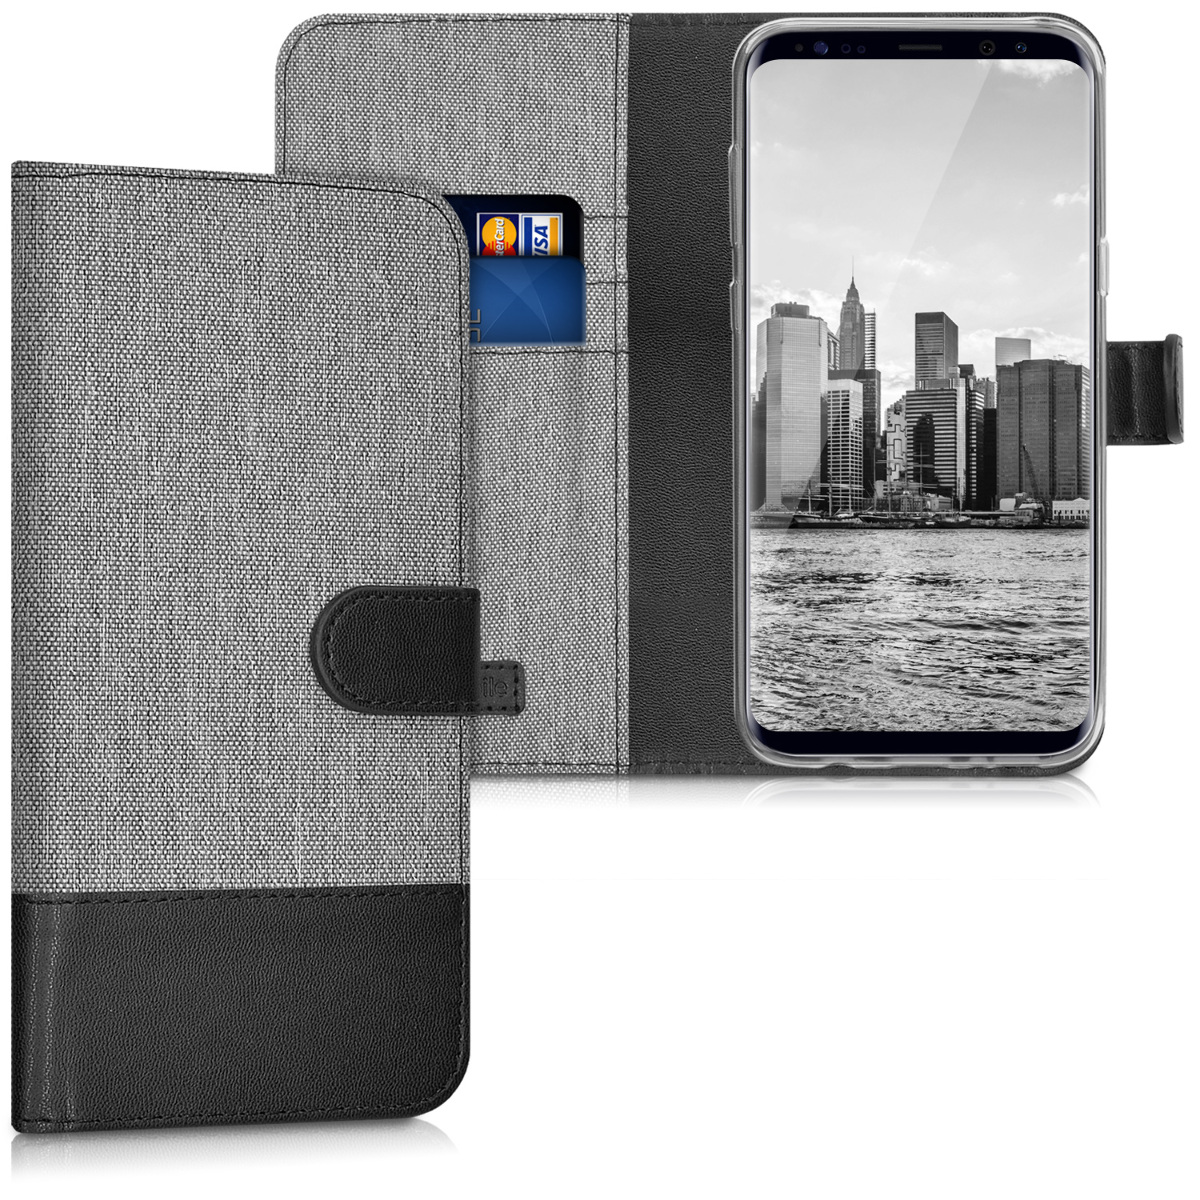 Fabricpouzdro pro Samsung S8 Plus - šedé / černé